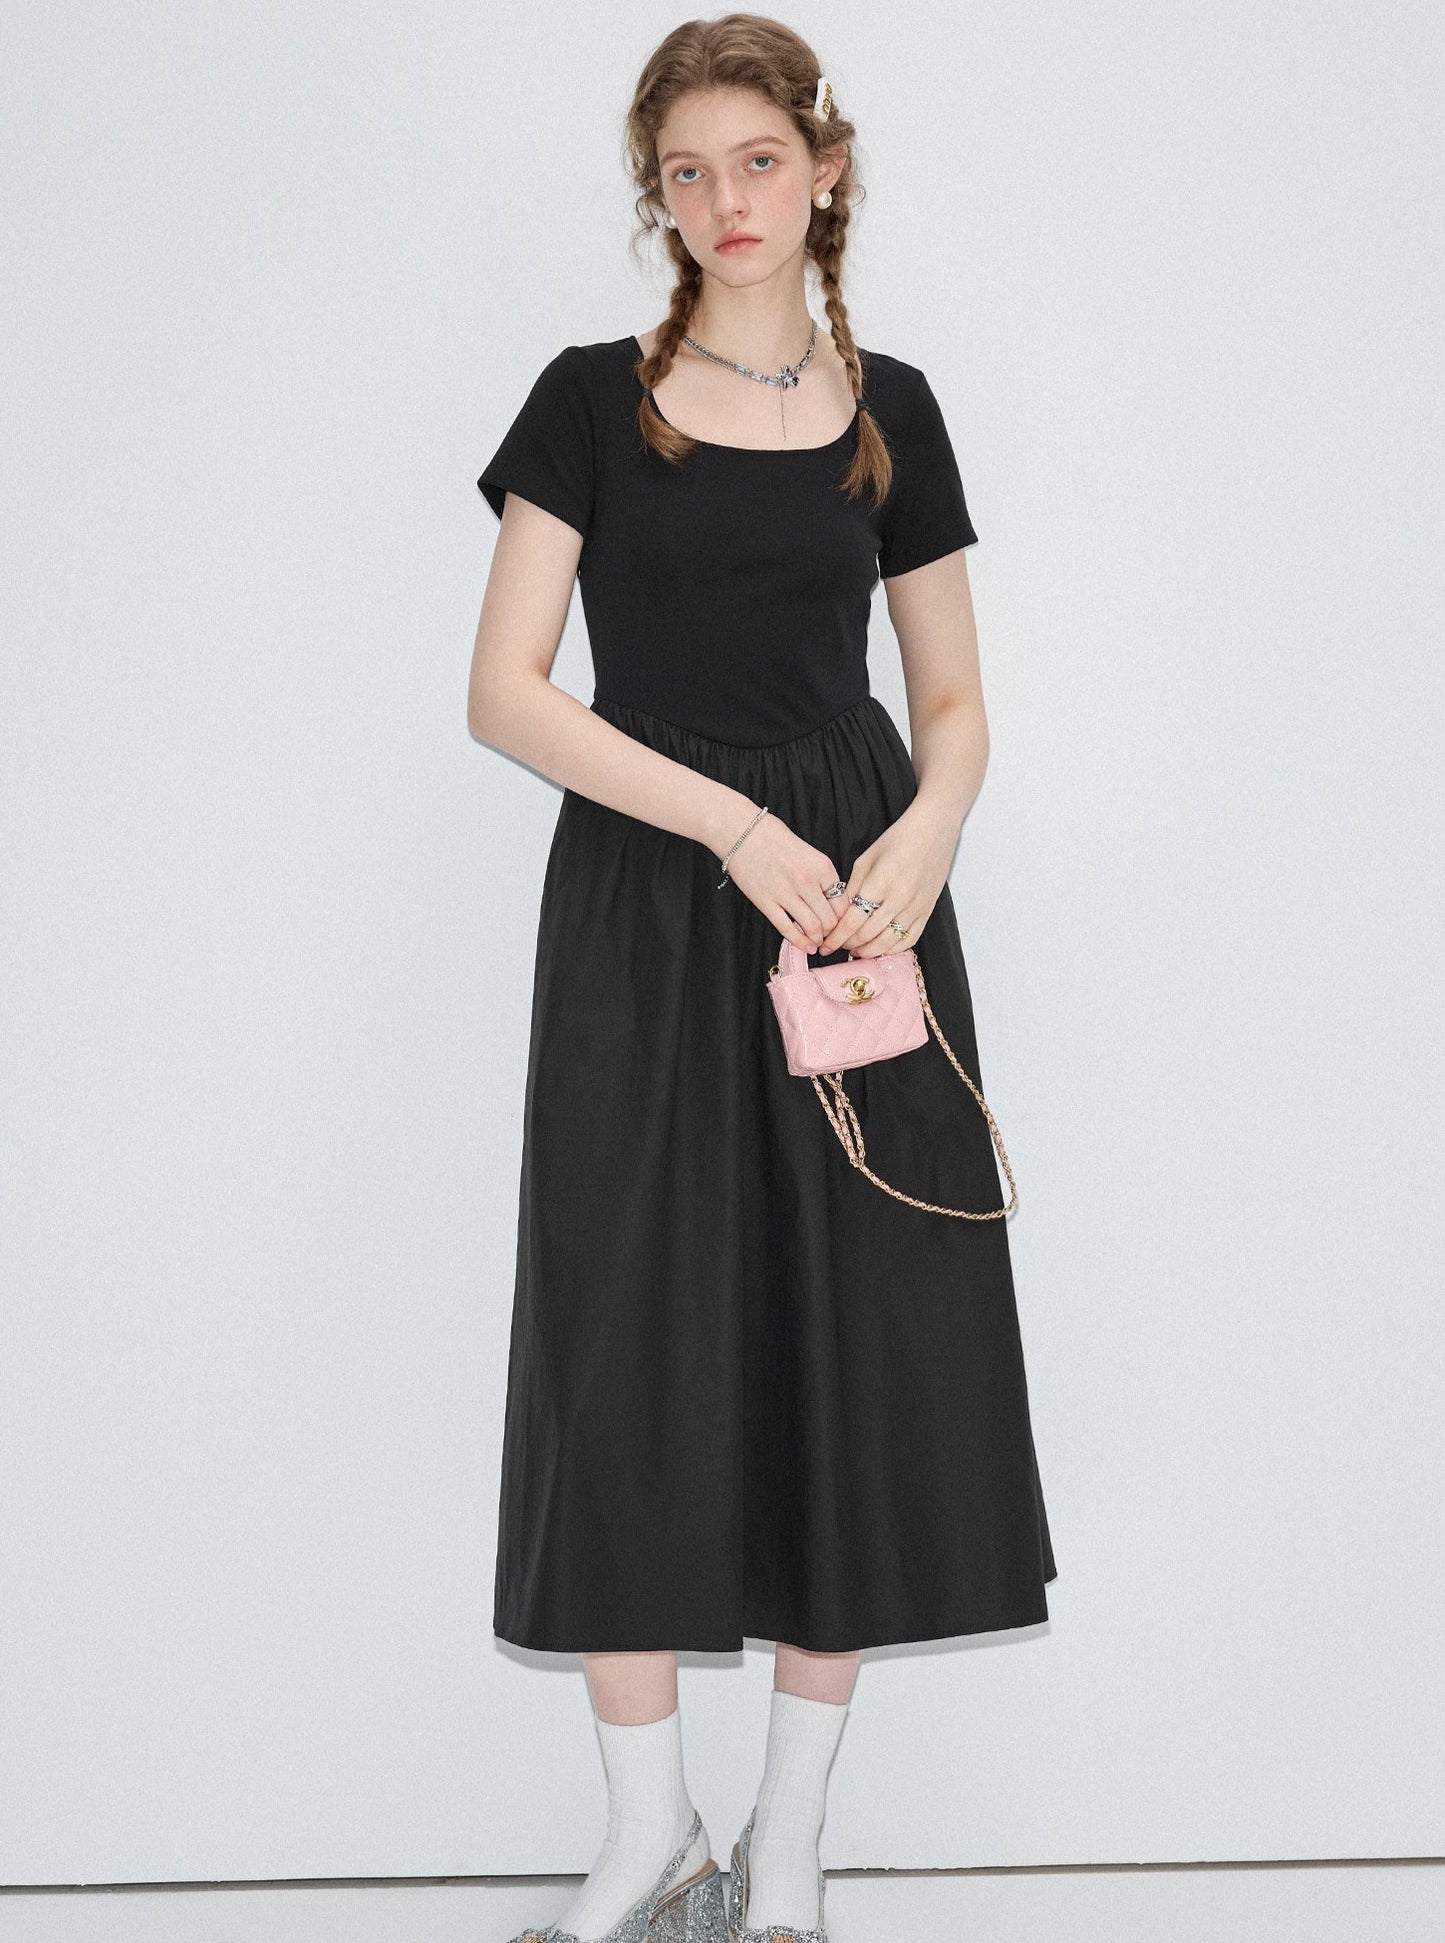 Small Stature Style Knit Dress